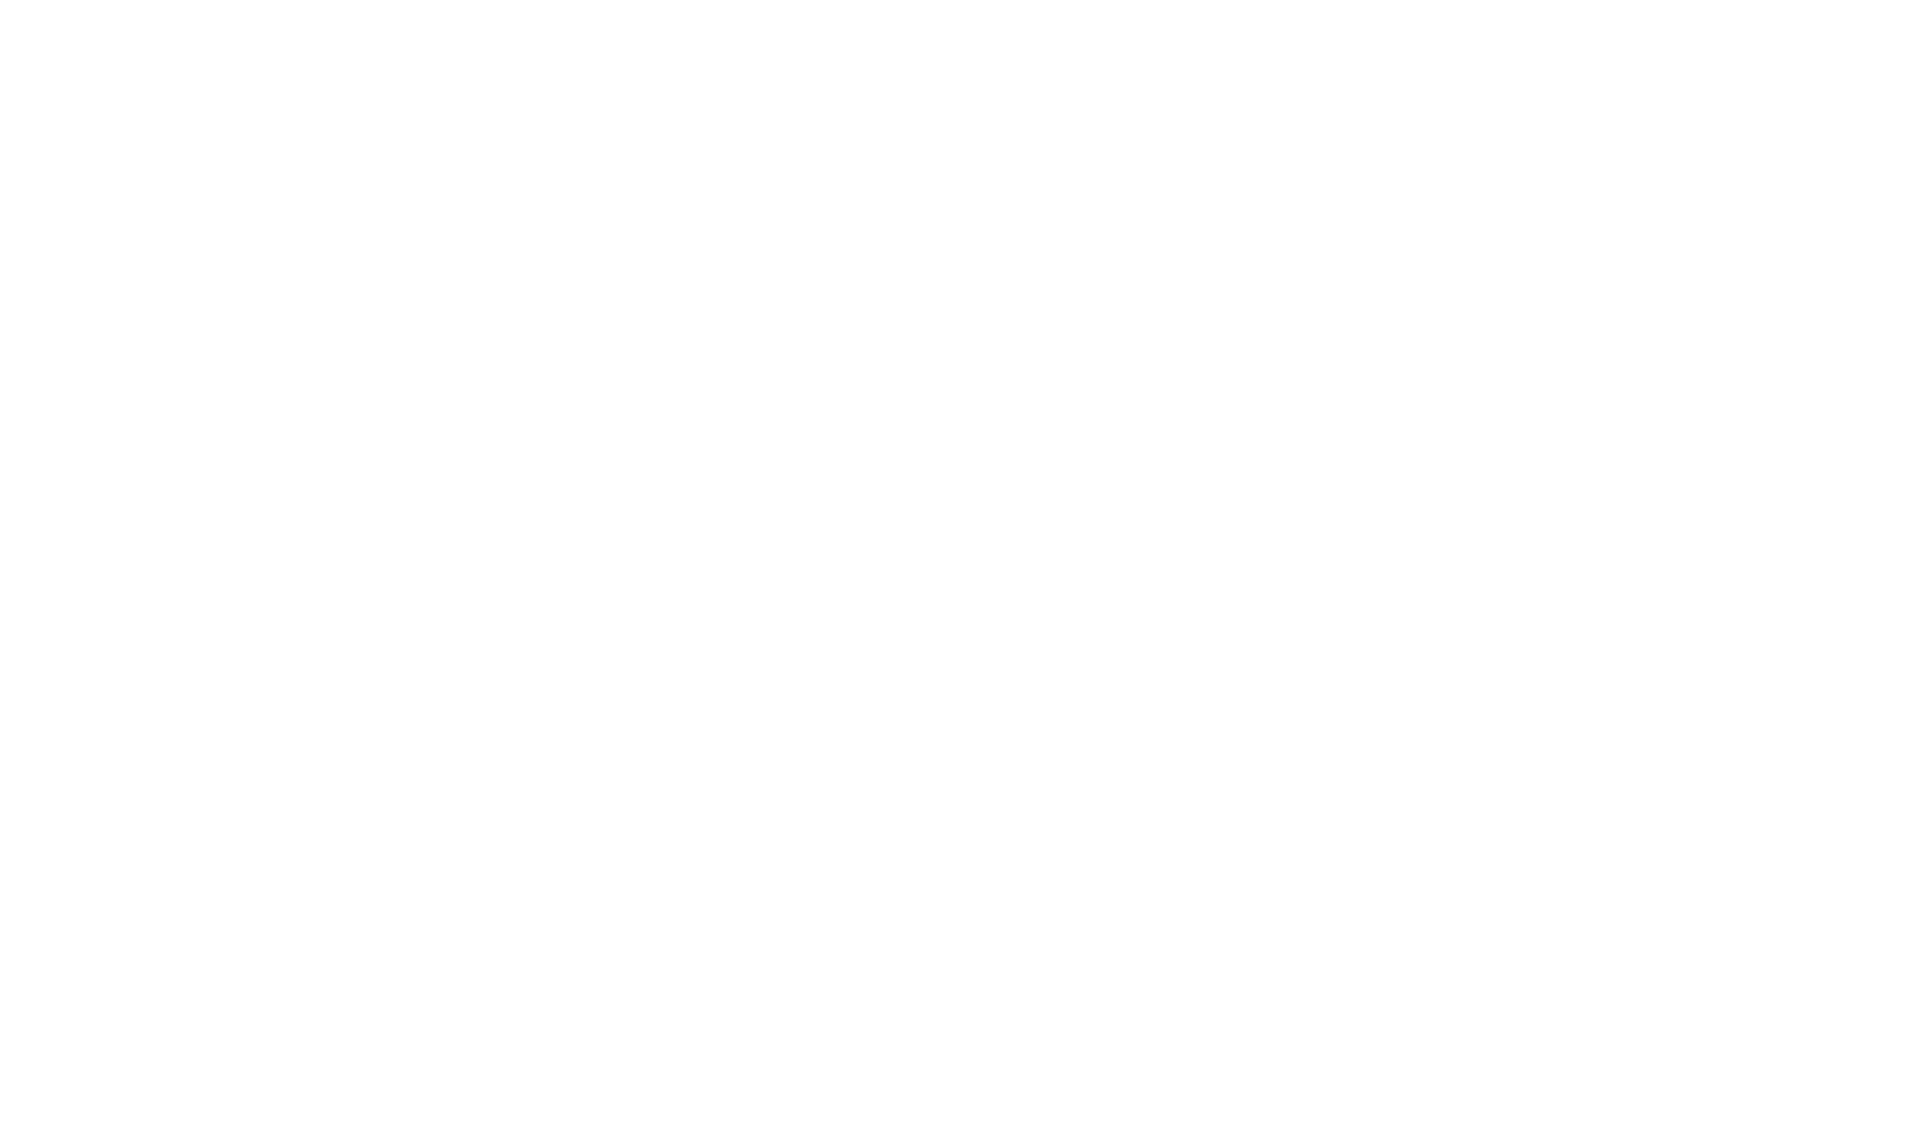 Padwood Construction